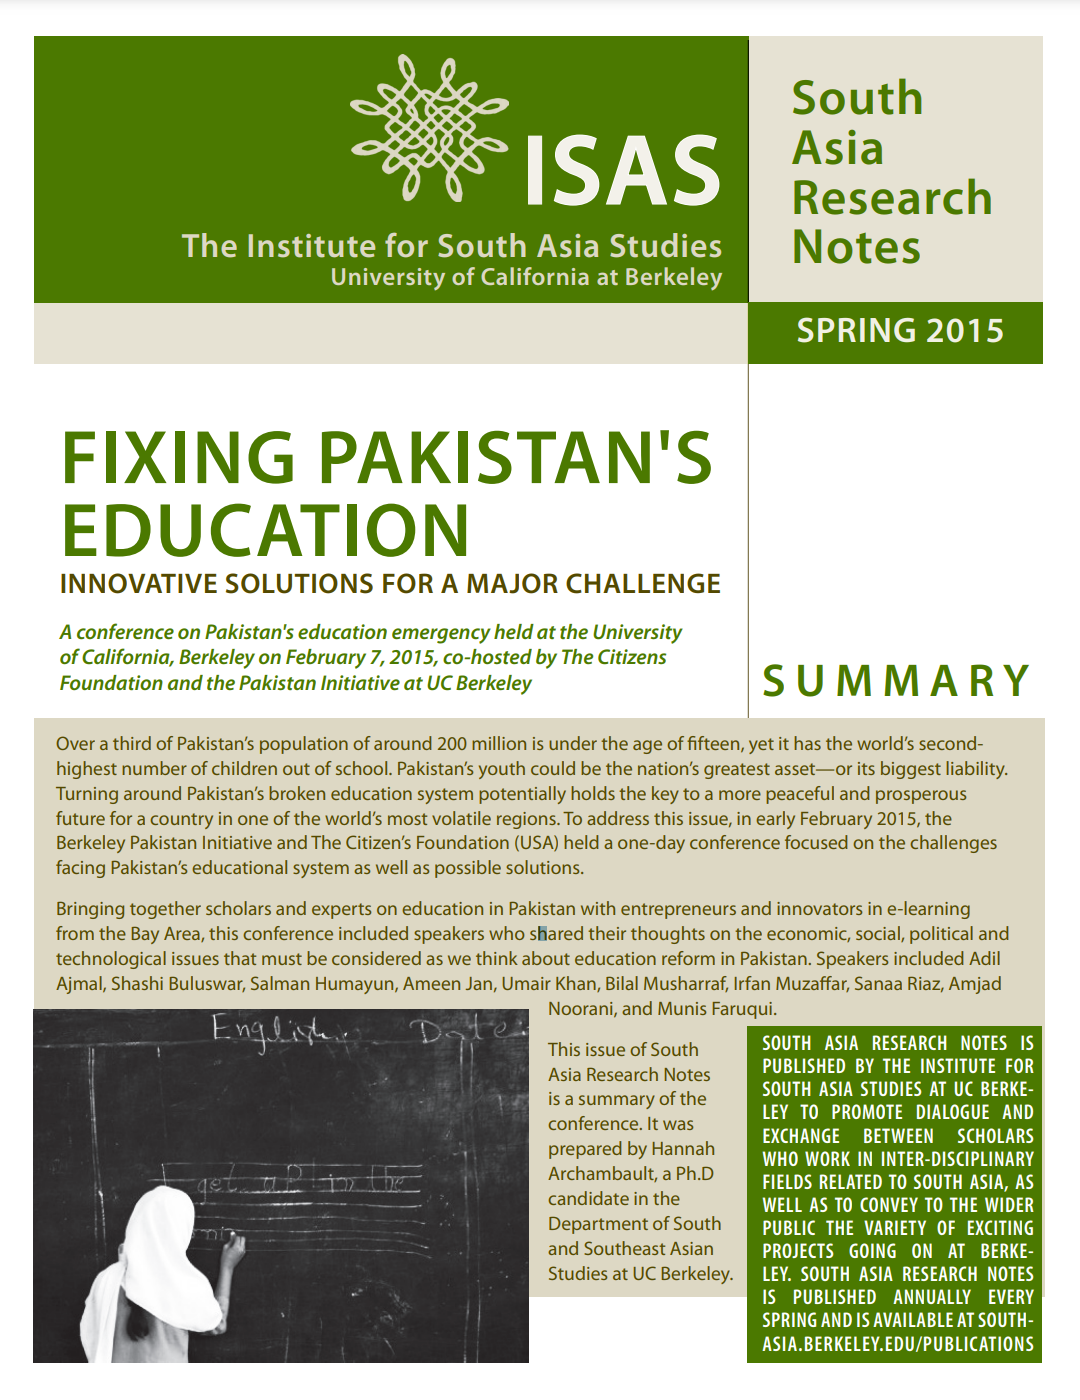 Fixing Pakistan's Education cover